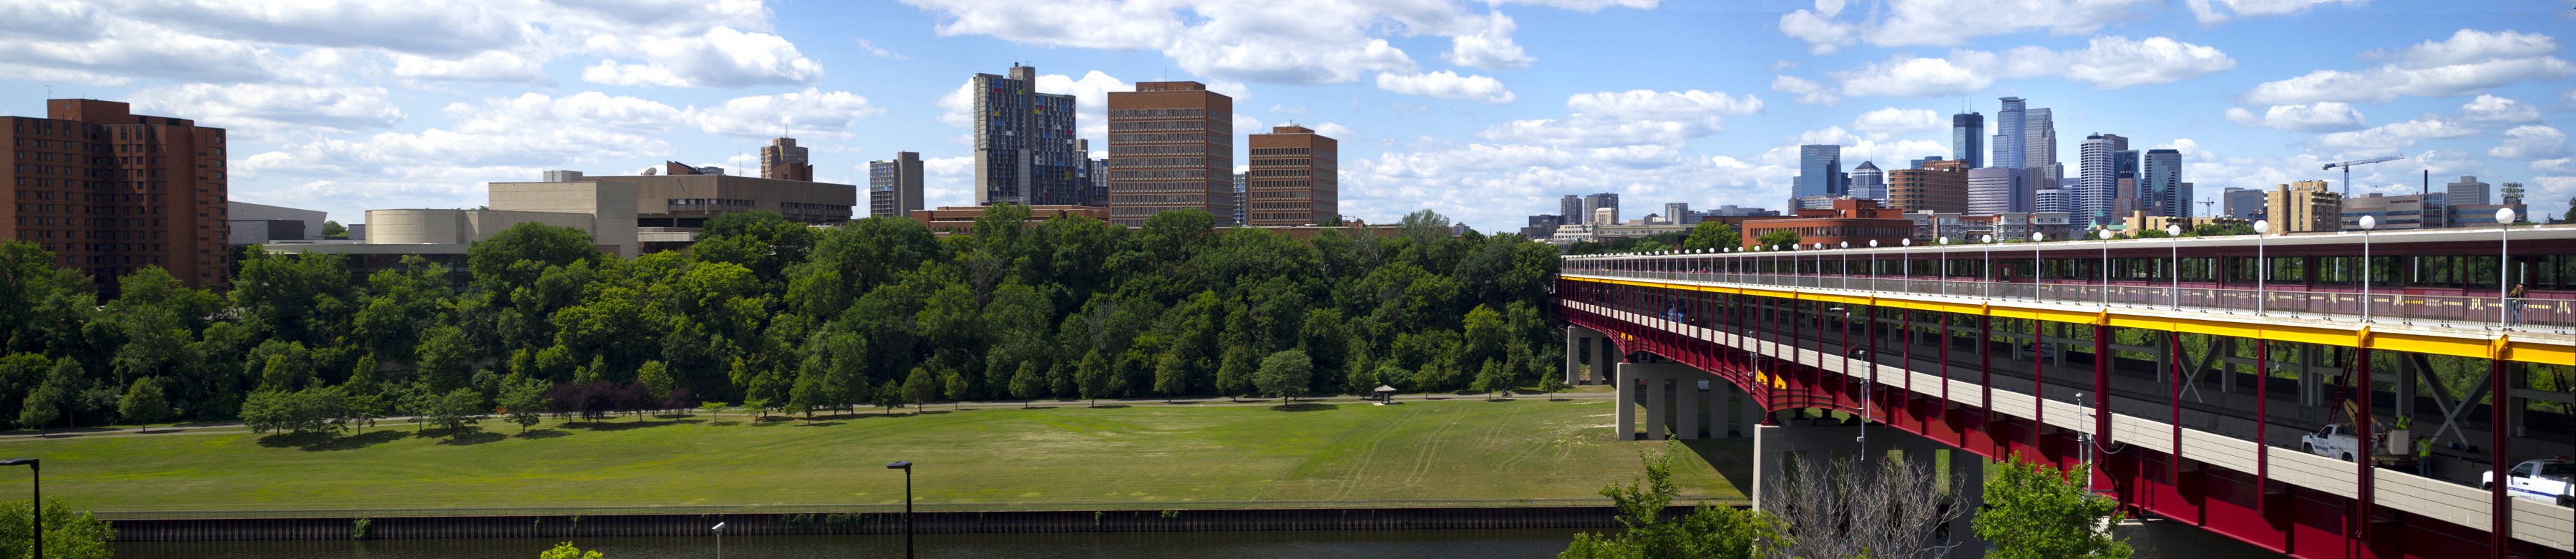 panorama of the Minneapolis skyline, the Washington Avenue Bridge, and the UMN West Bank